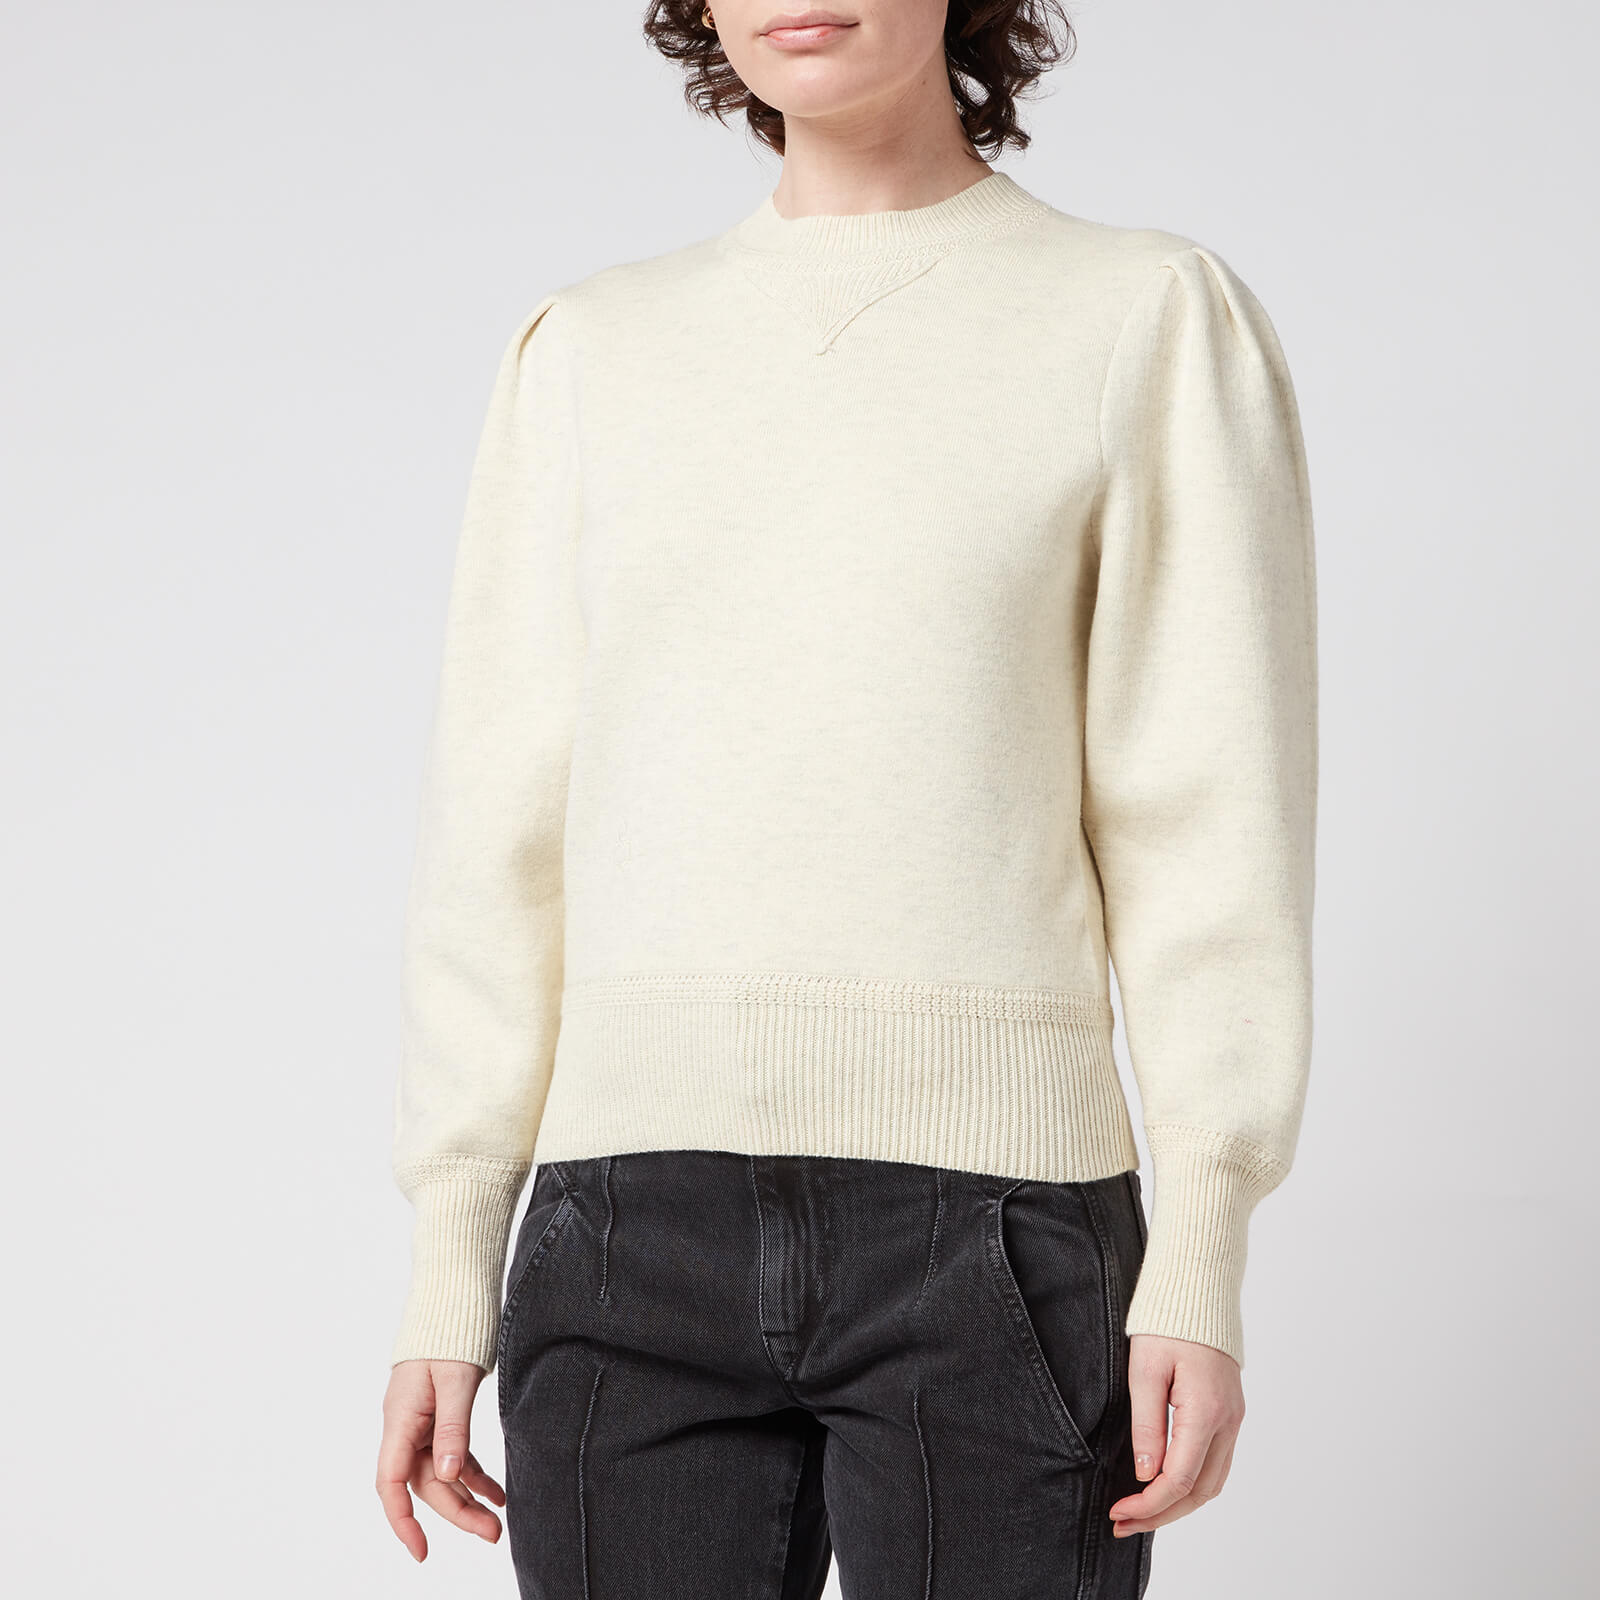 Isabel Marant toile Women's Kelaya Sweatshirt - Light Grey - FR 36/UK 8